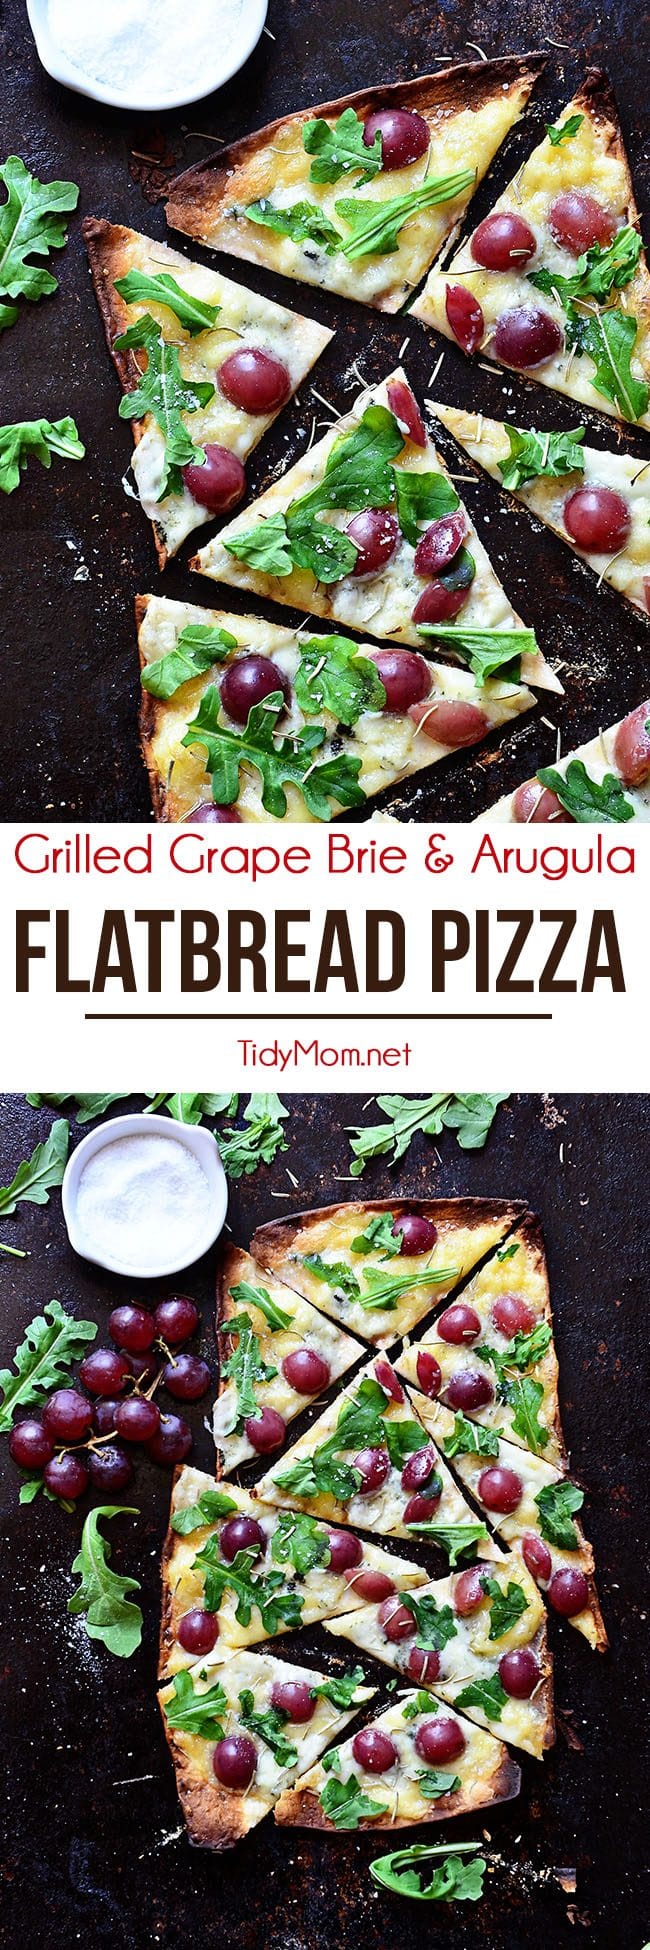 Grilled Grape Brie and Arugula Flatbread Pizza recipe at TidyMom.net